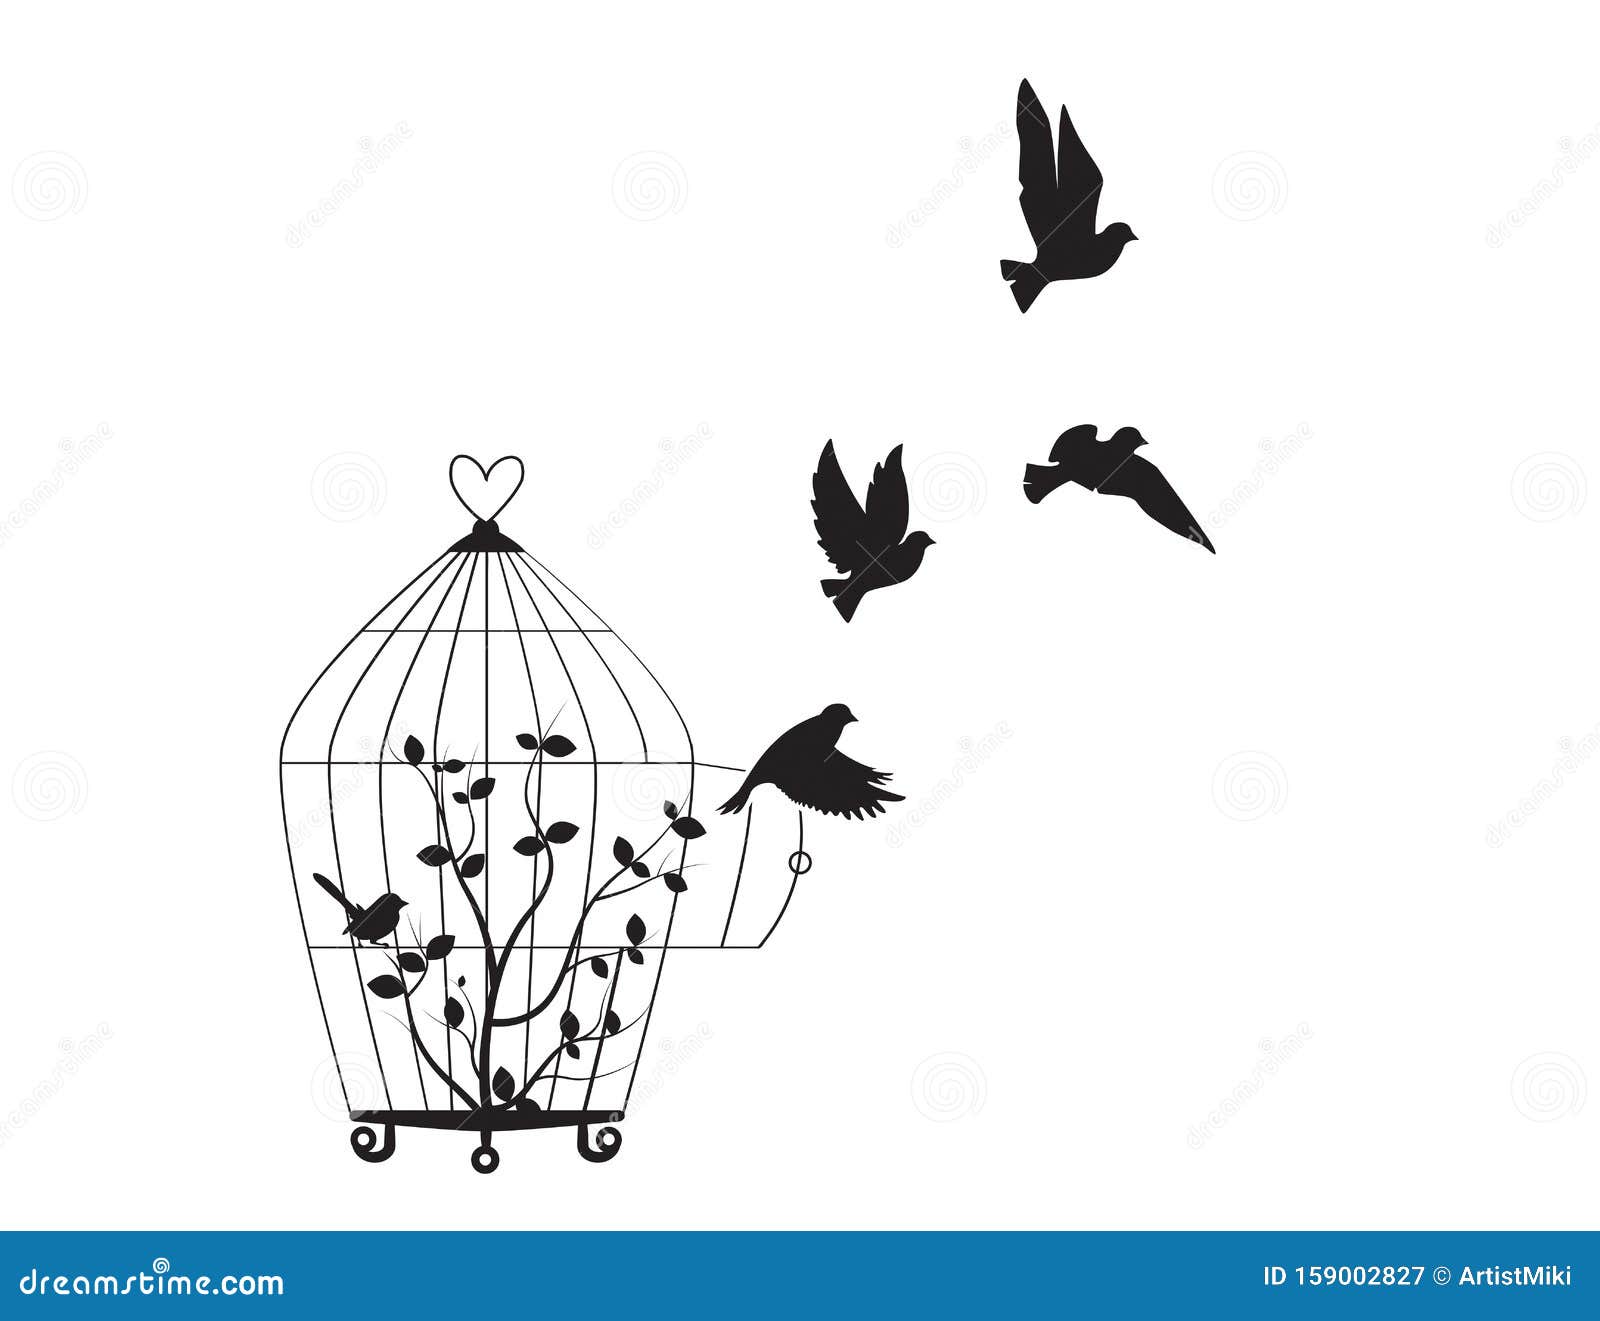 Keep me from the cages. Птица символ свободы. Птица свободы черная силы черный эскиз. Открытая клетка как символ свободы. Freedom symbol.